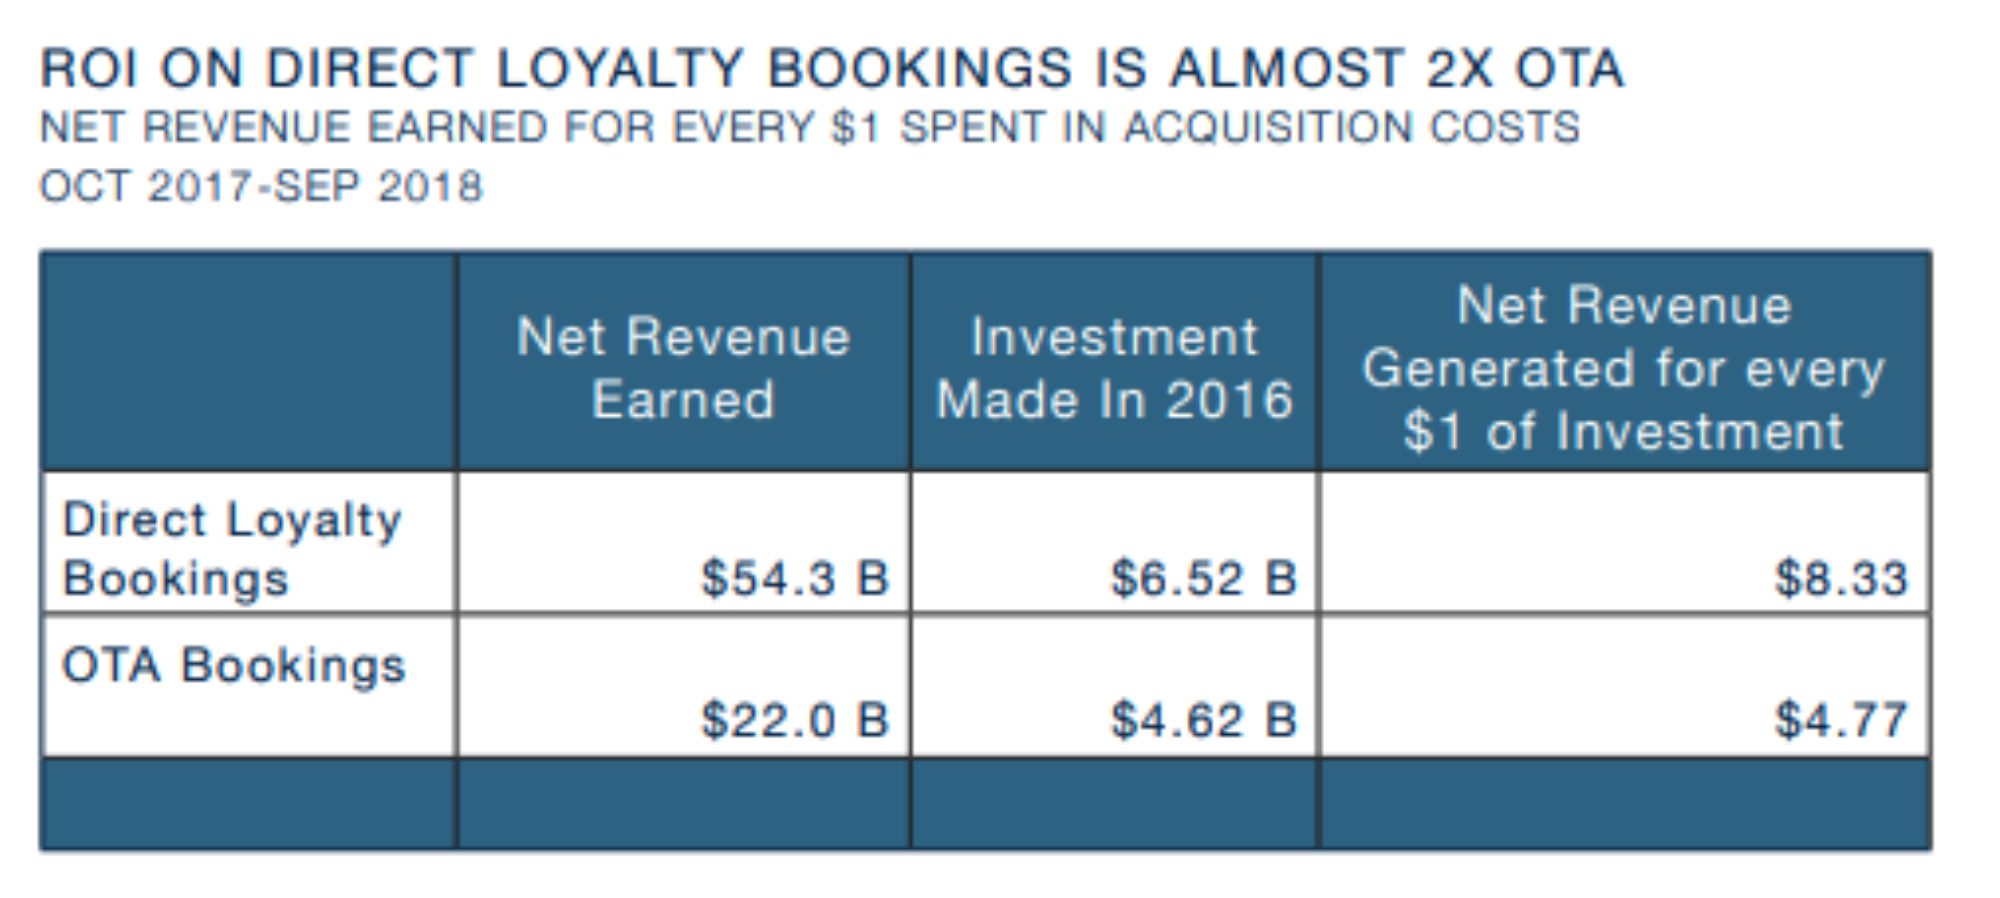 Bowo • Kalibri ROI on direct loyalty bookings is almost 2 X OTA